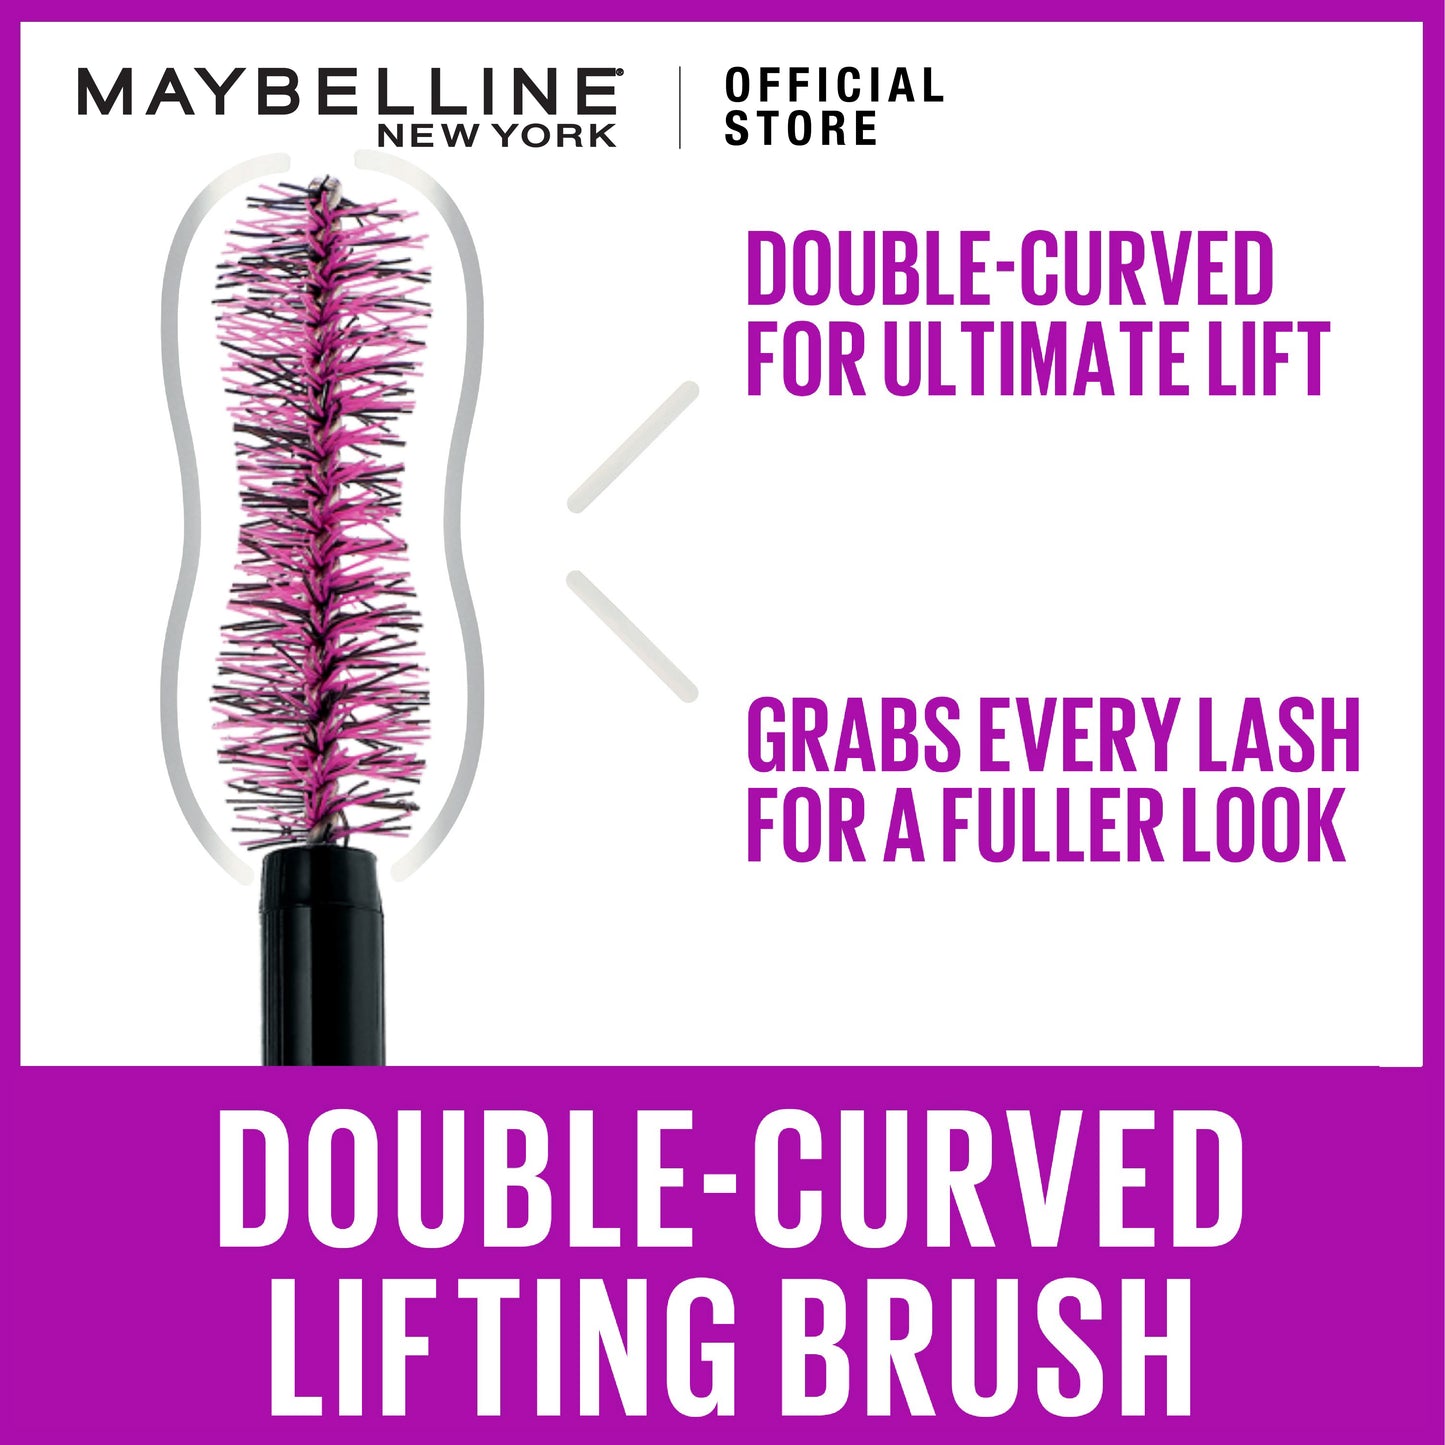 Maybelline New York Falsies Waterproof Lash Lift Mascara